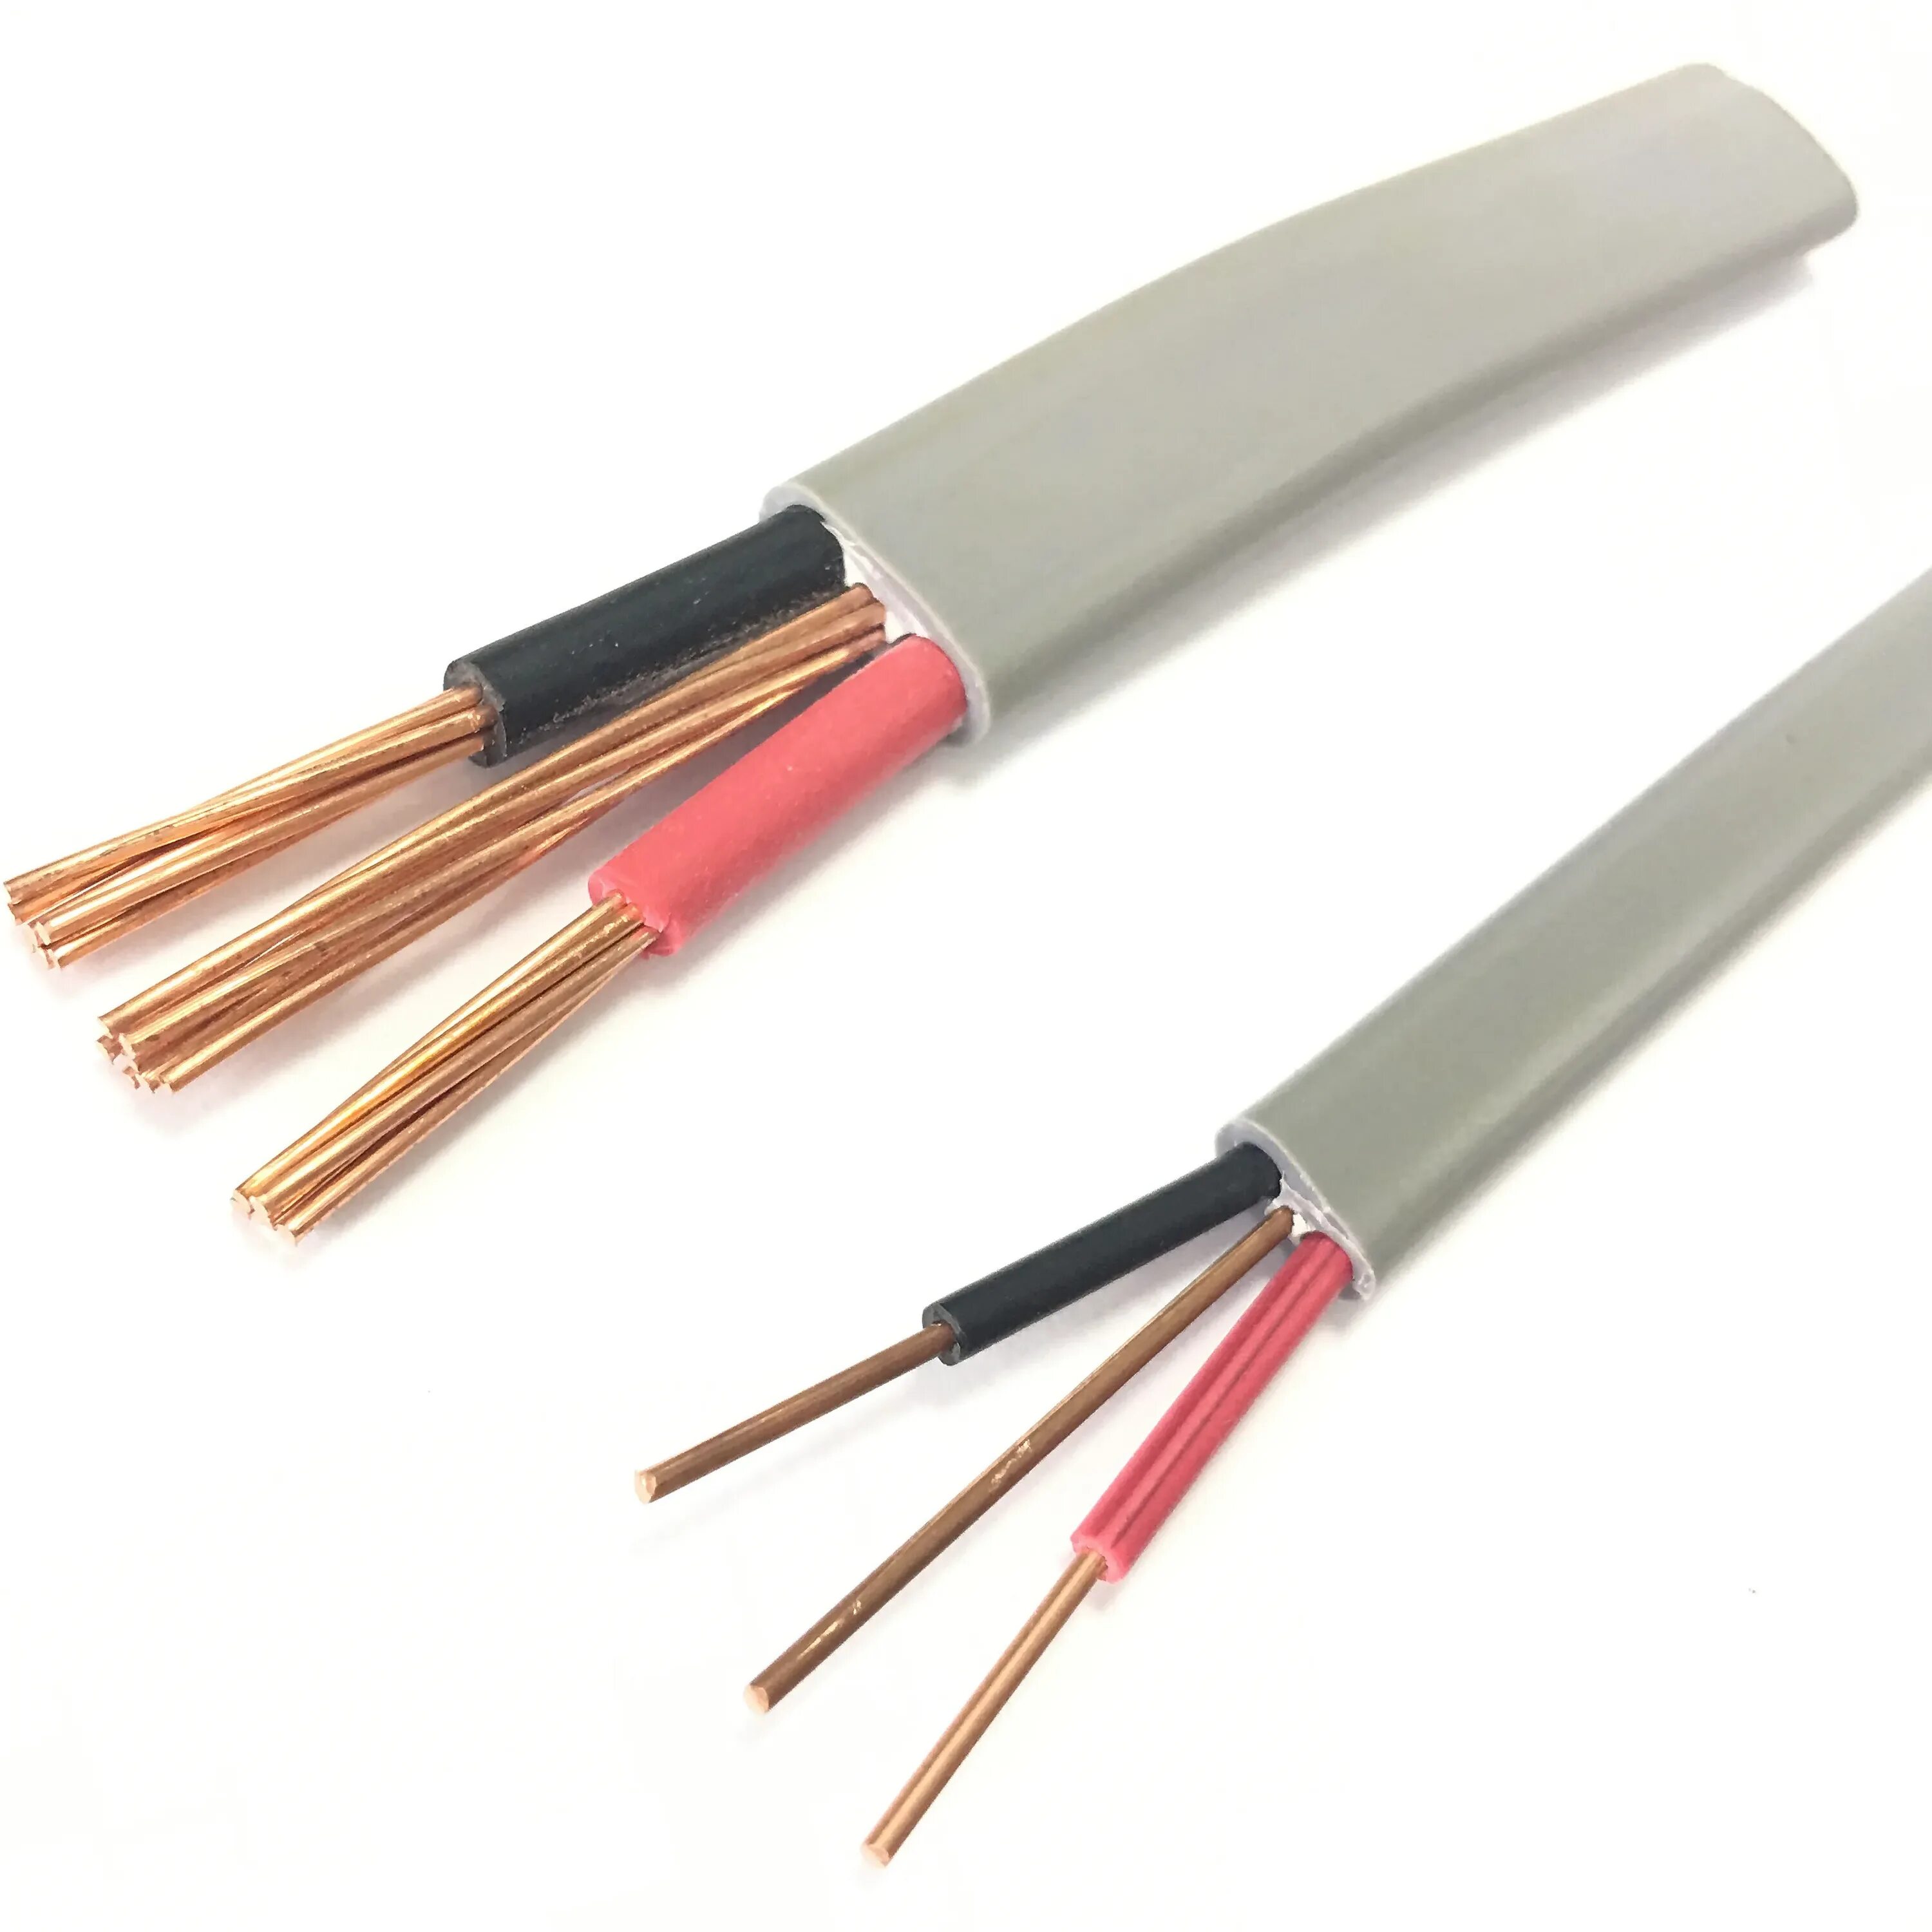 Flat кабель. Кабель PVC 2x0.5. 2x0.5 mm2 PVC Cable. Плоский кабель (Flat Cable). As-i разветвитель для плоского кабеля (Flat Cable 50 Meter EPDM ye).